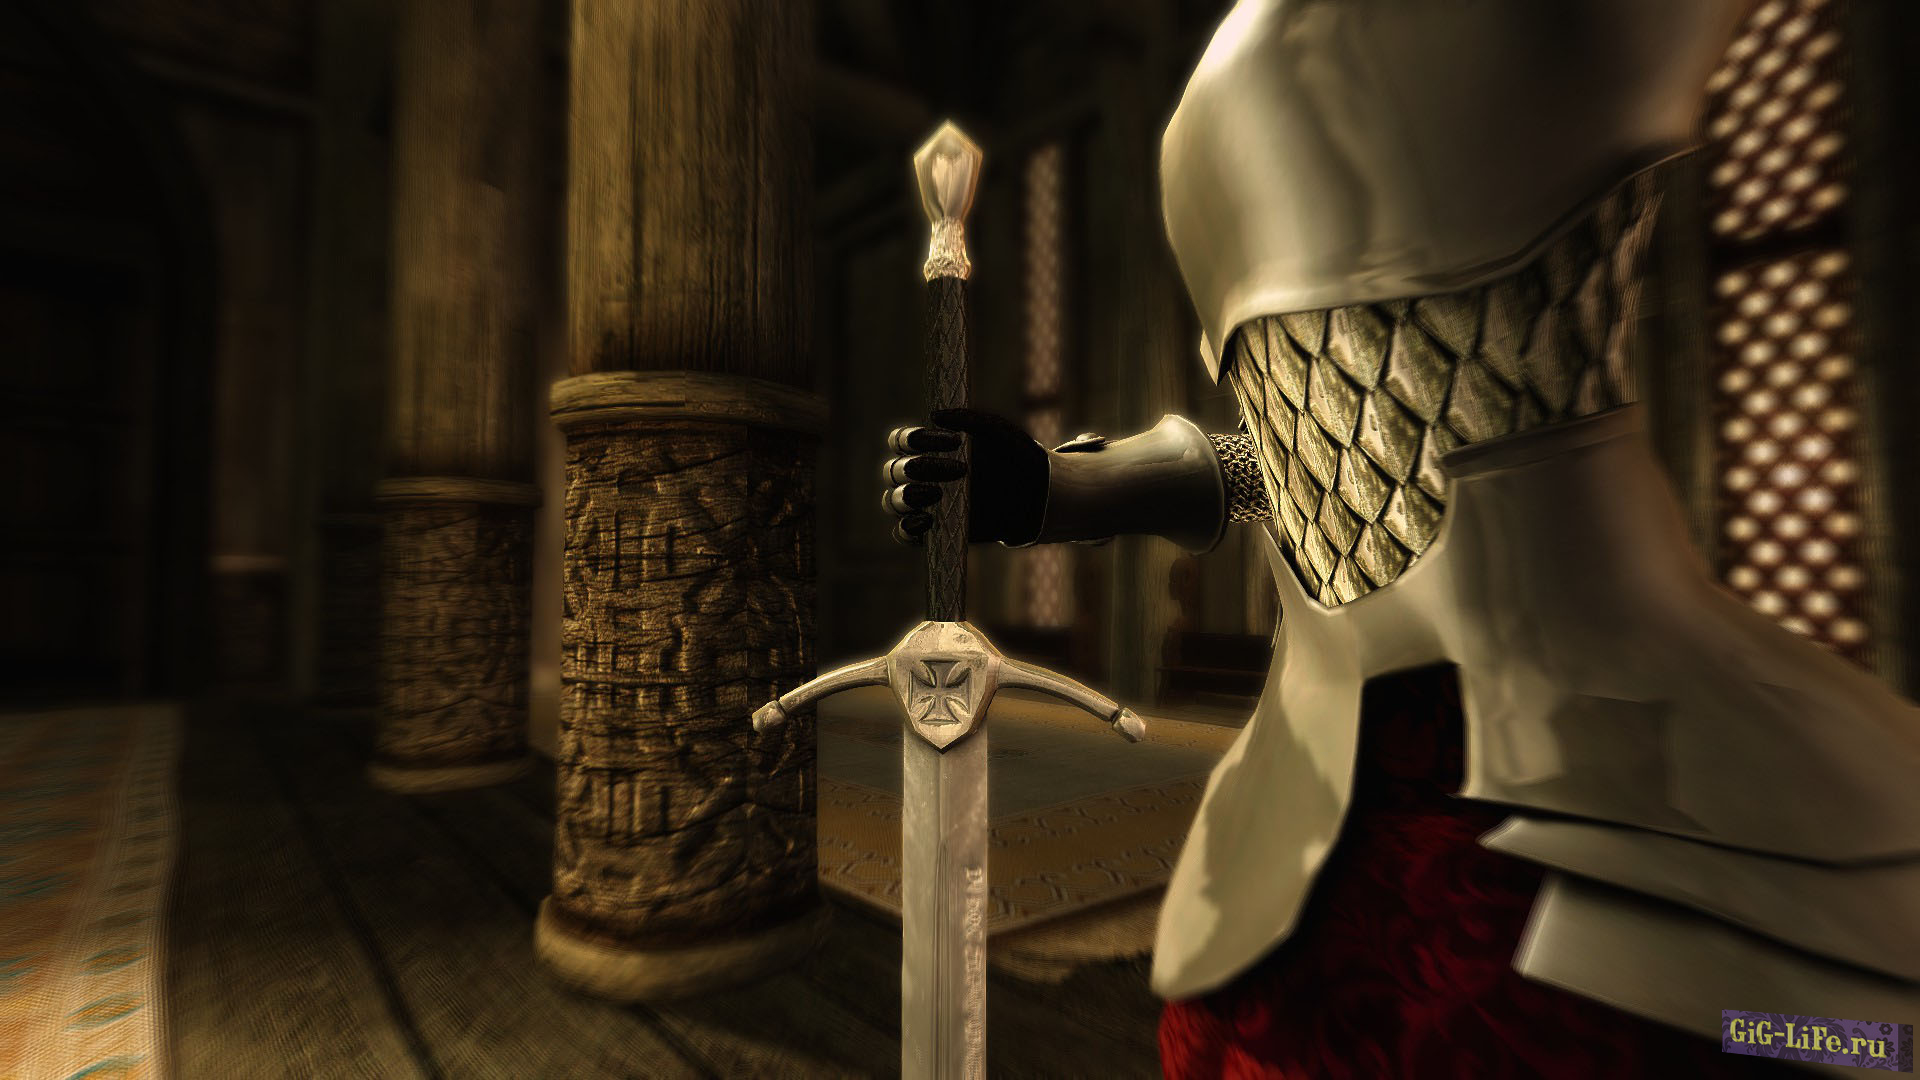 Skyrim — Доспехи рыцаря для UNP | Chevaleresse Armor for UNP